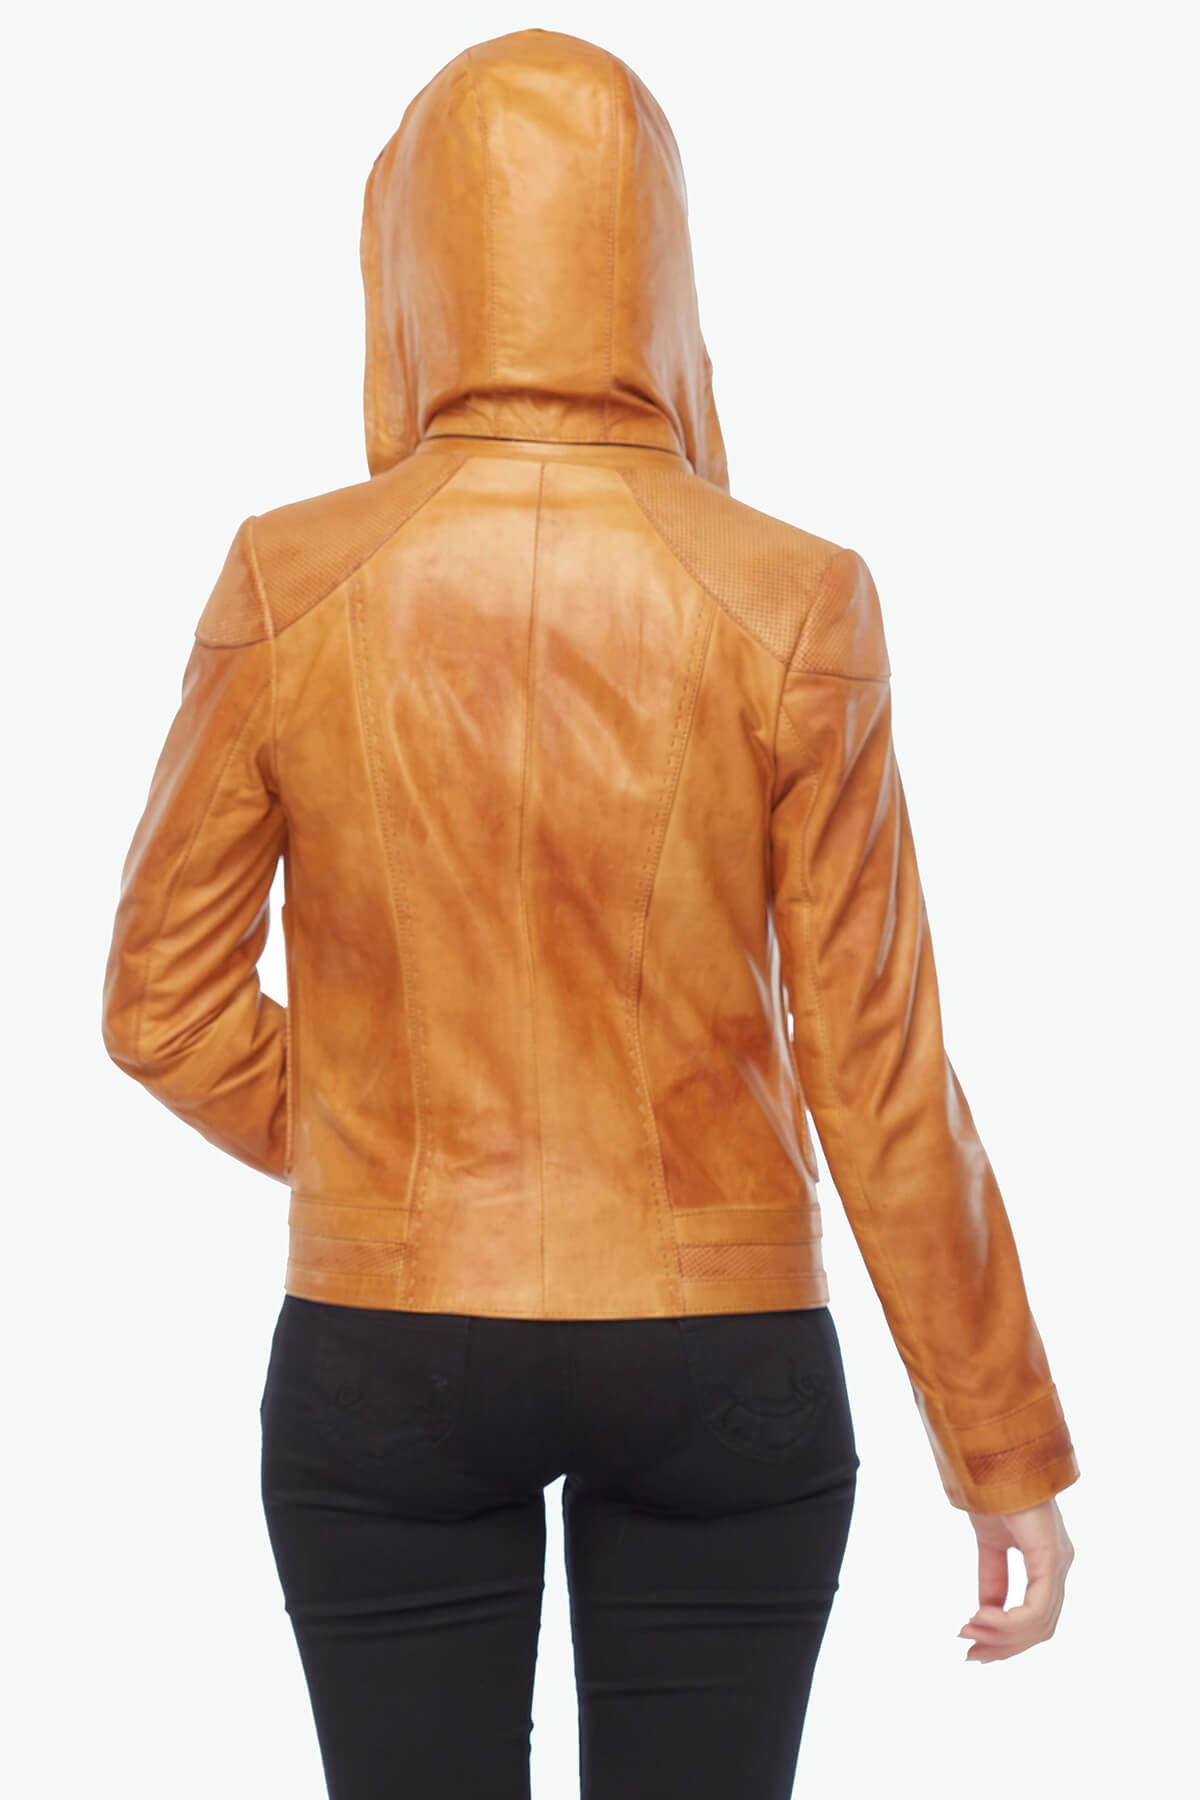 Hooded Tan Women's Leather Jacket